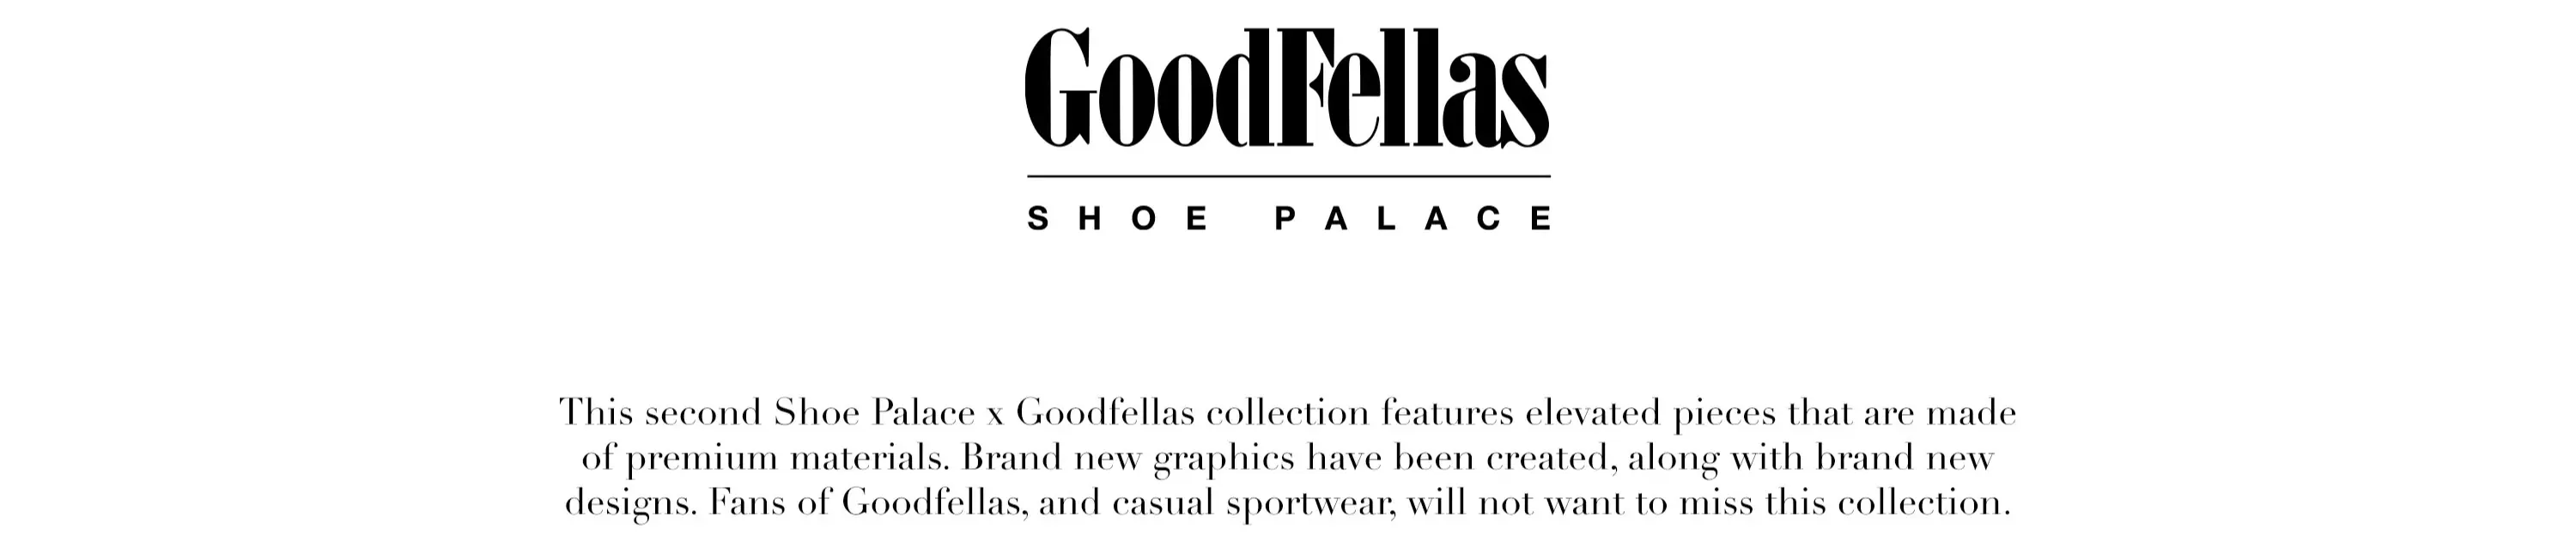 goodfellas lookbook